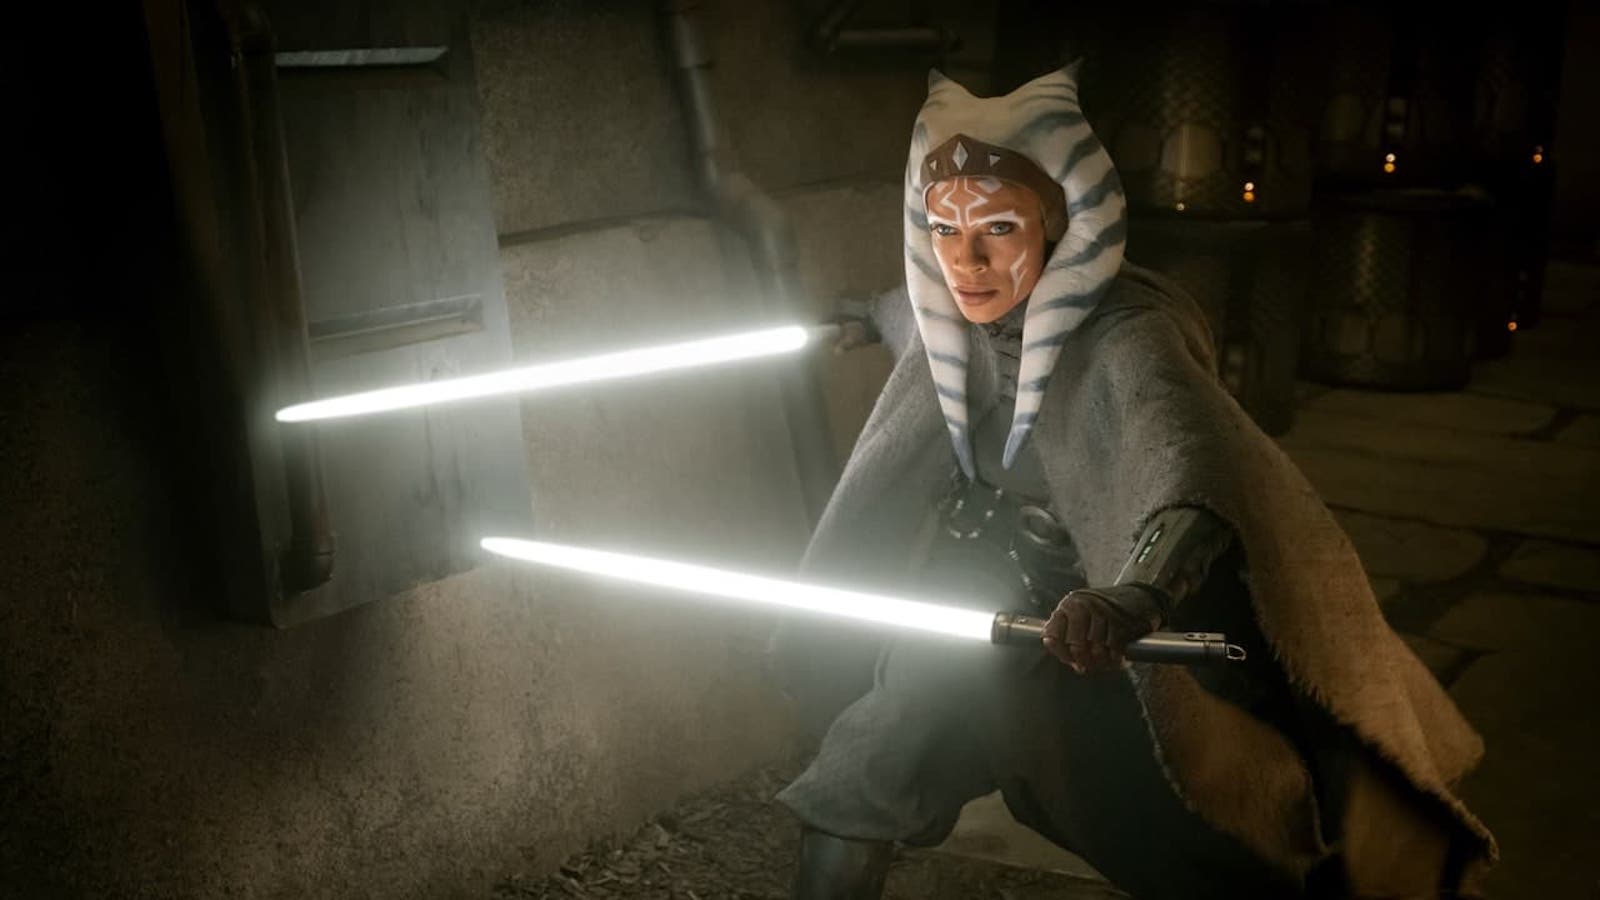 Star Wars Ahsoka, Dave Filoni reveals: 'I started writing it long before The Force Awakens'